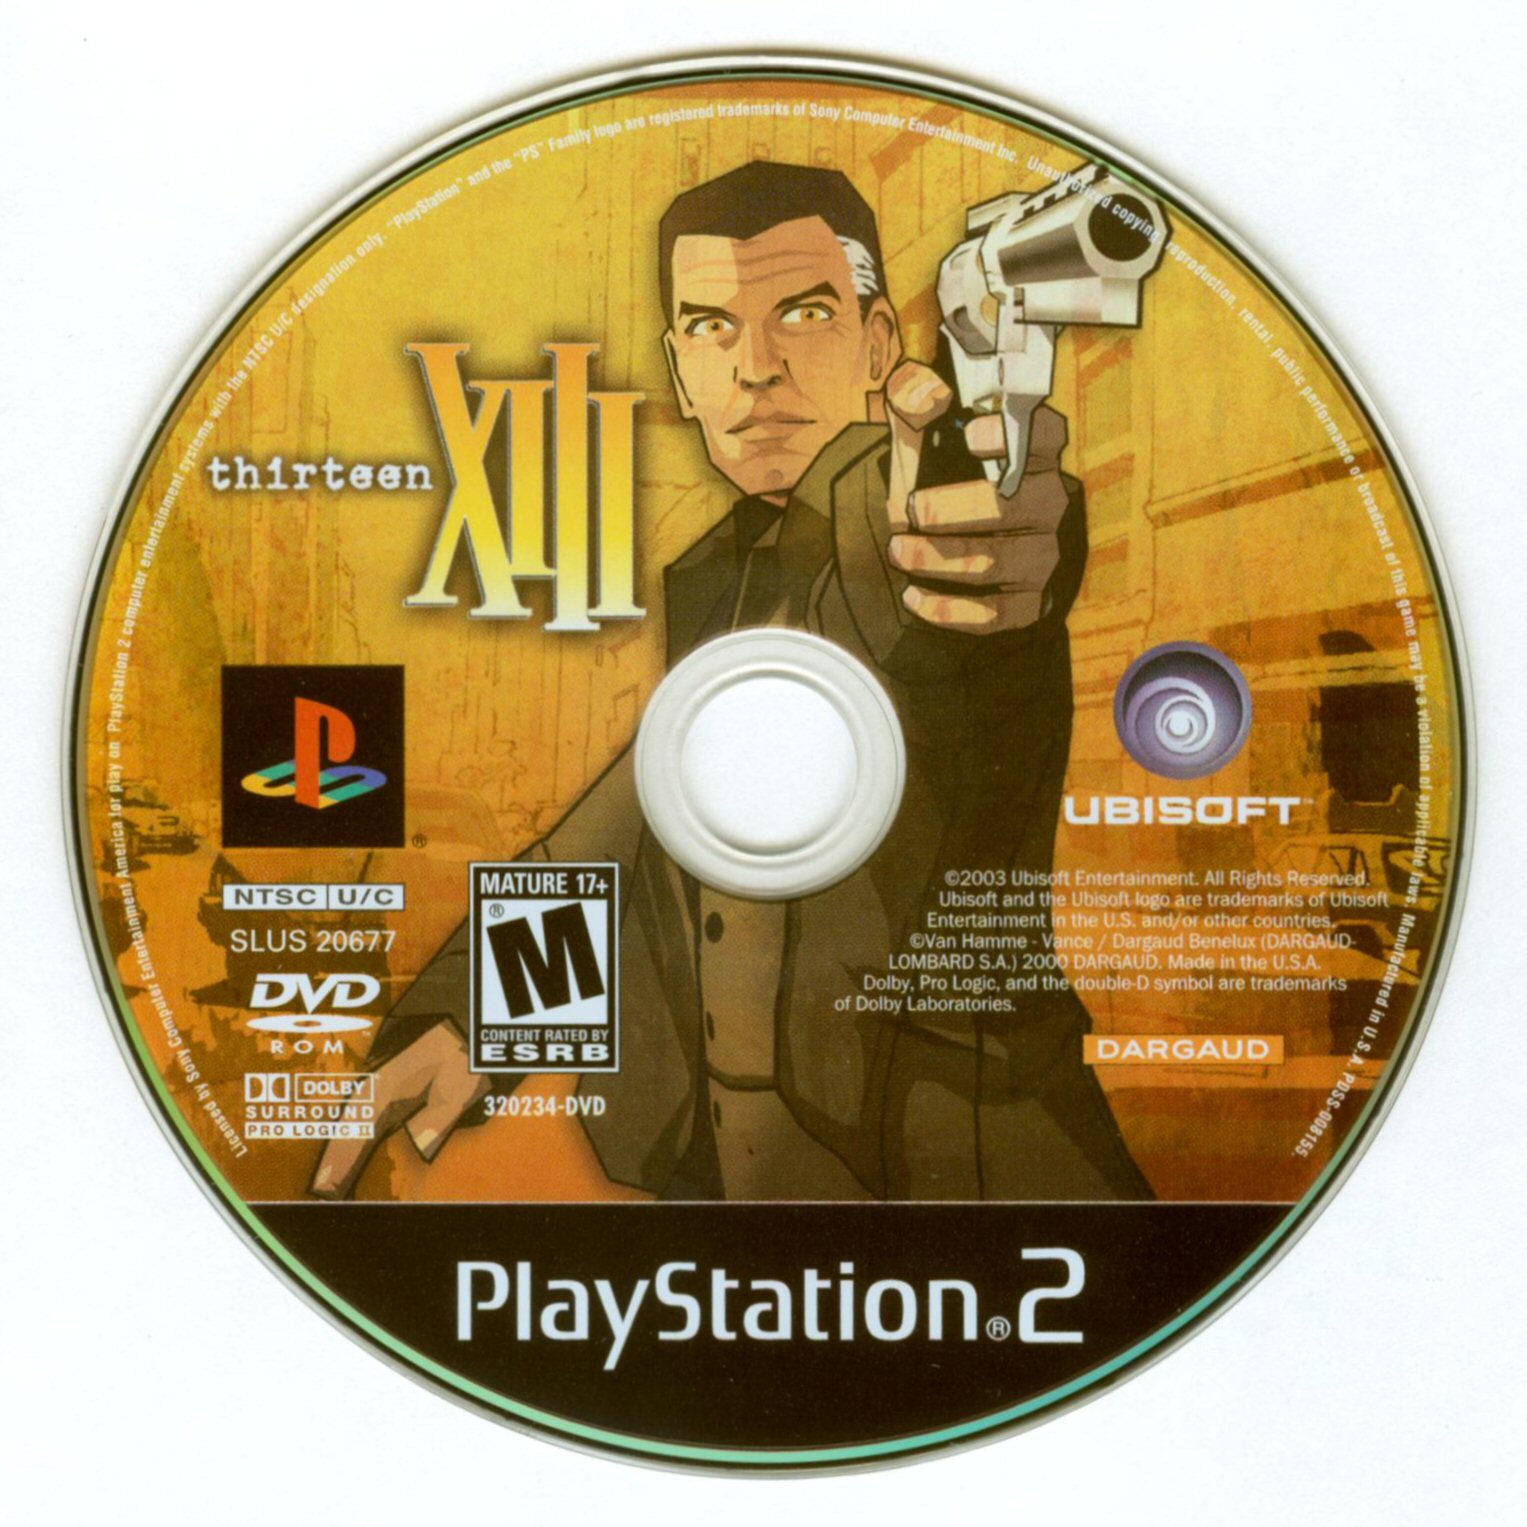 13 18 игр 13 игр. XIII ps2. Ps2 диск игры 2000-2006. Игра PS 13 PS 2. XIII ps2 обложка.